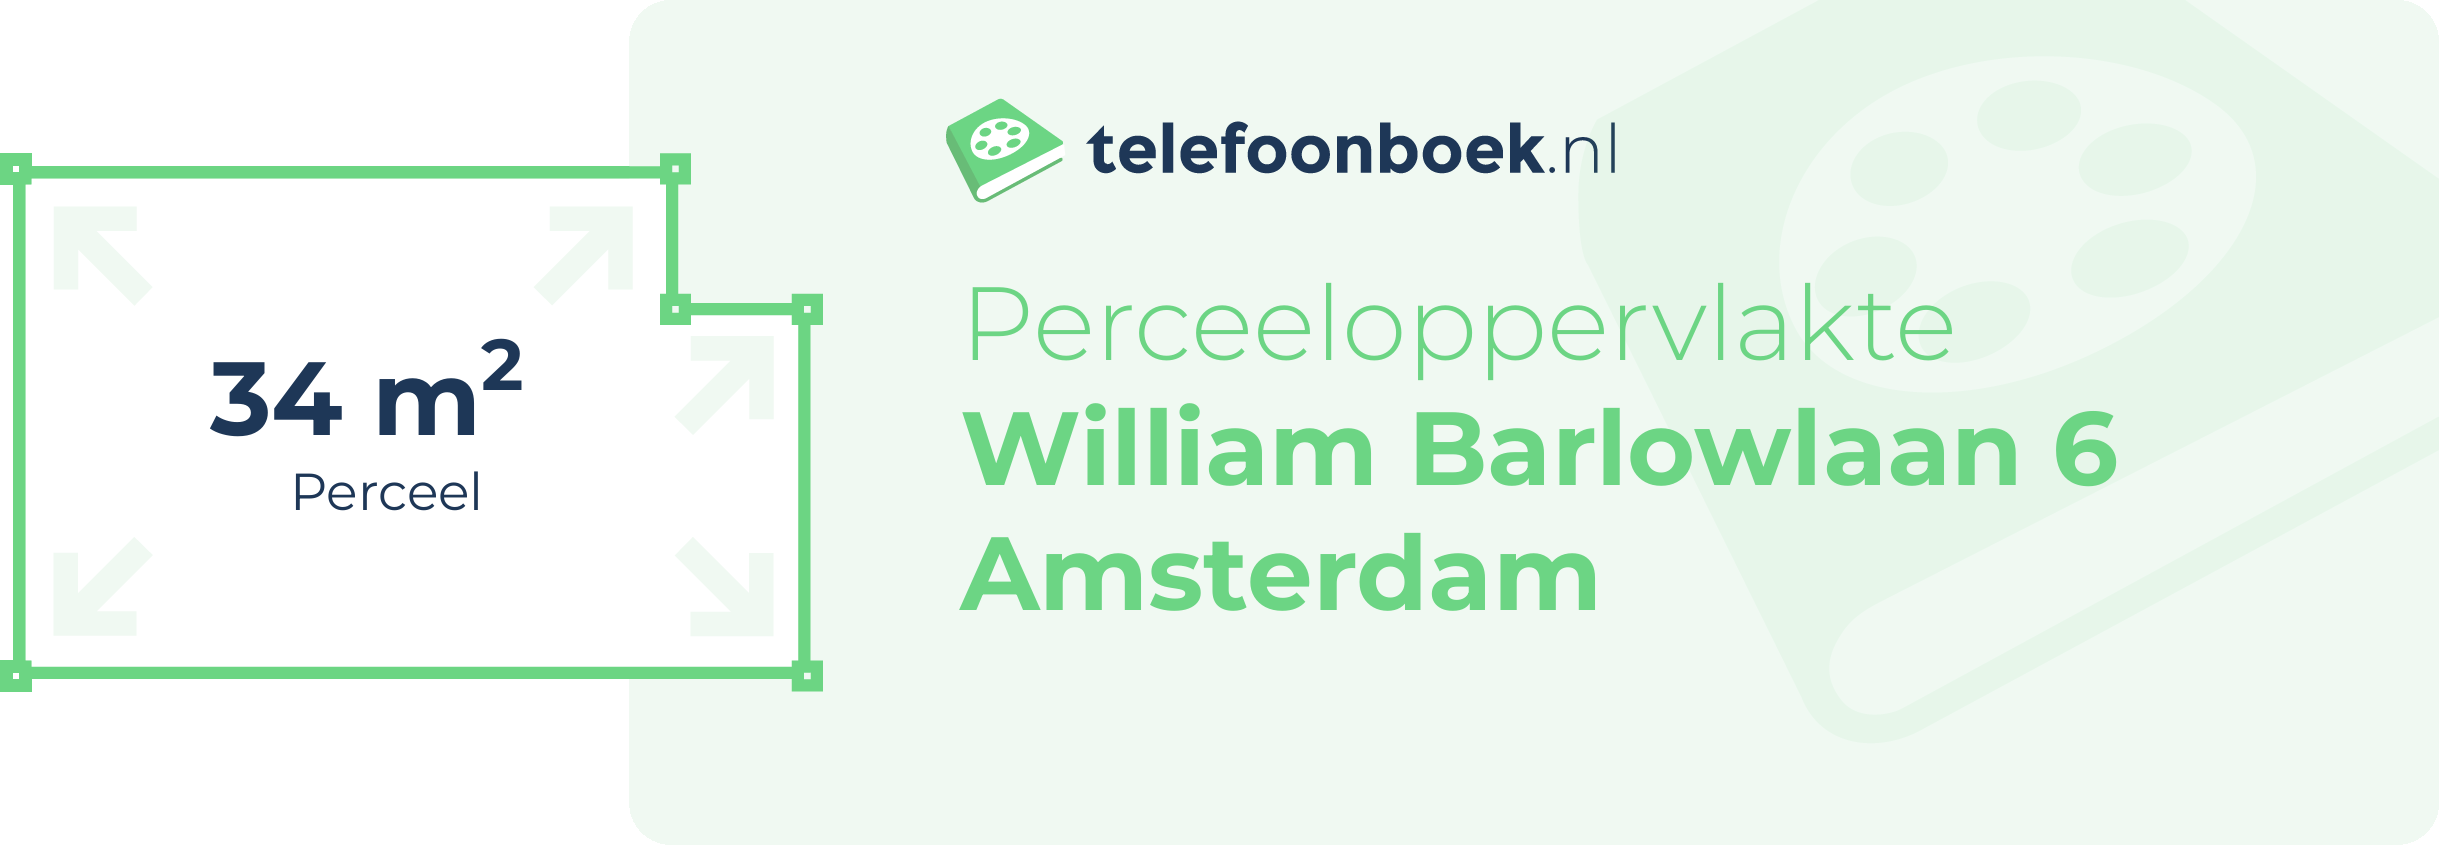 Perceeloppervlakte William Barlowlaan 6 Amsterdam